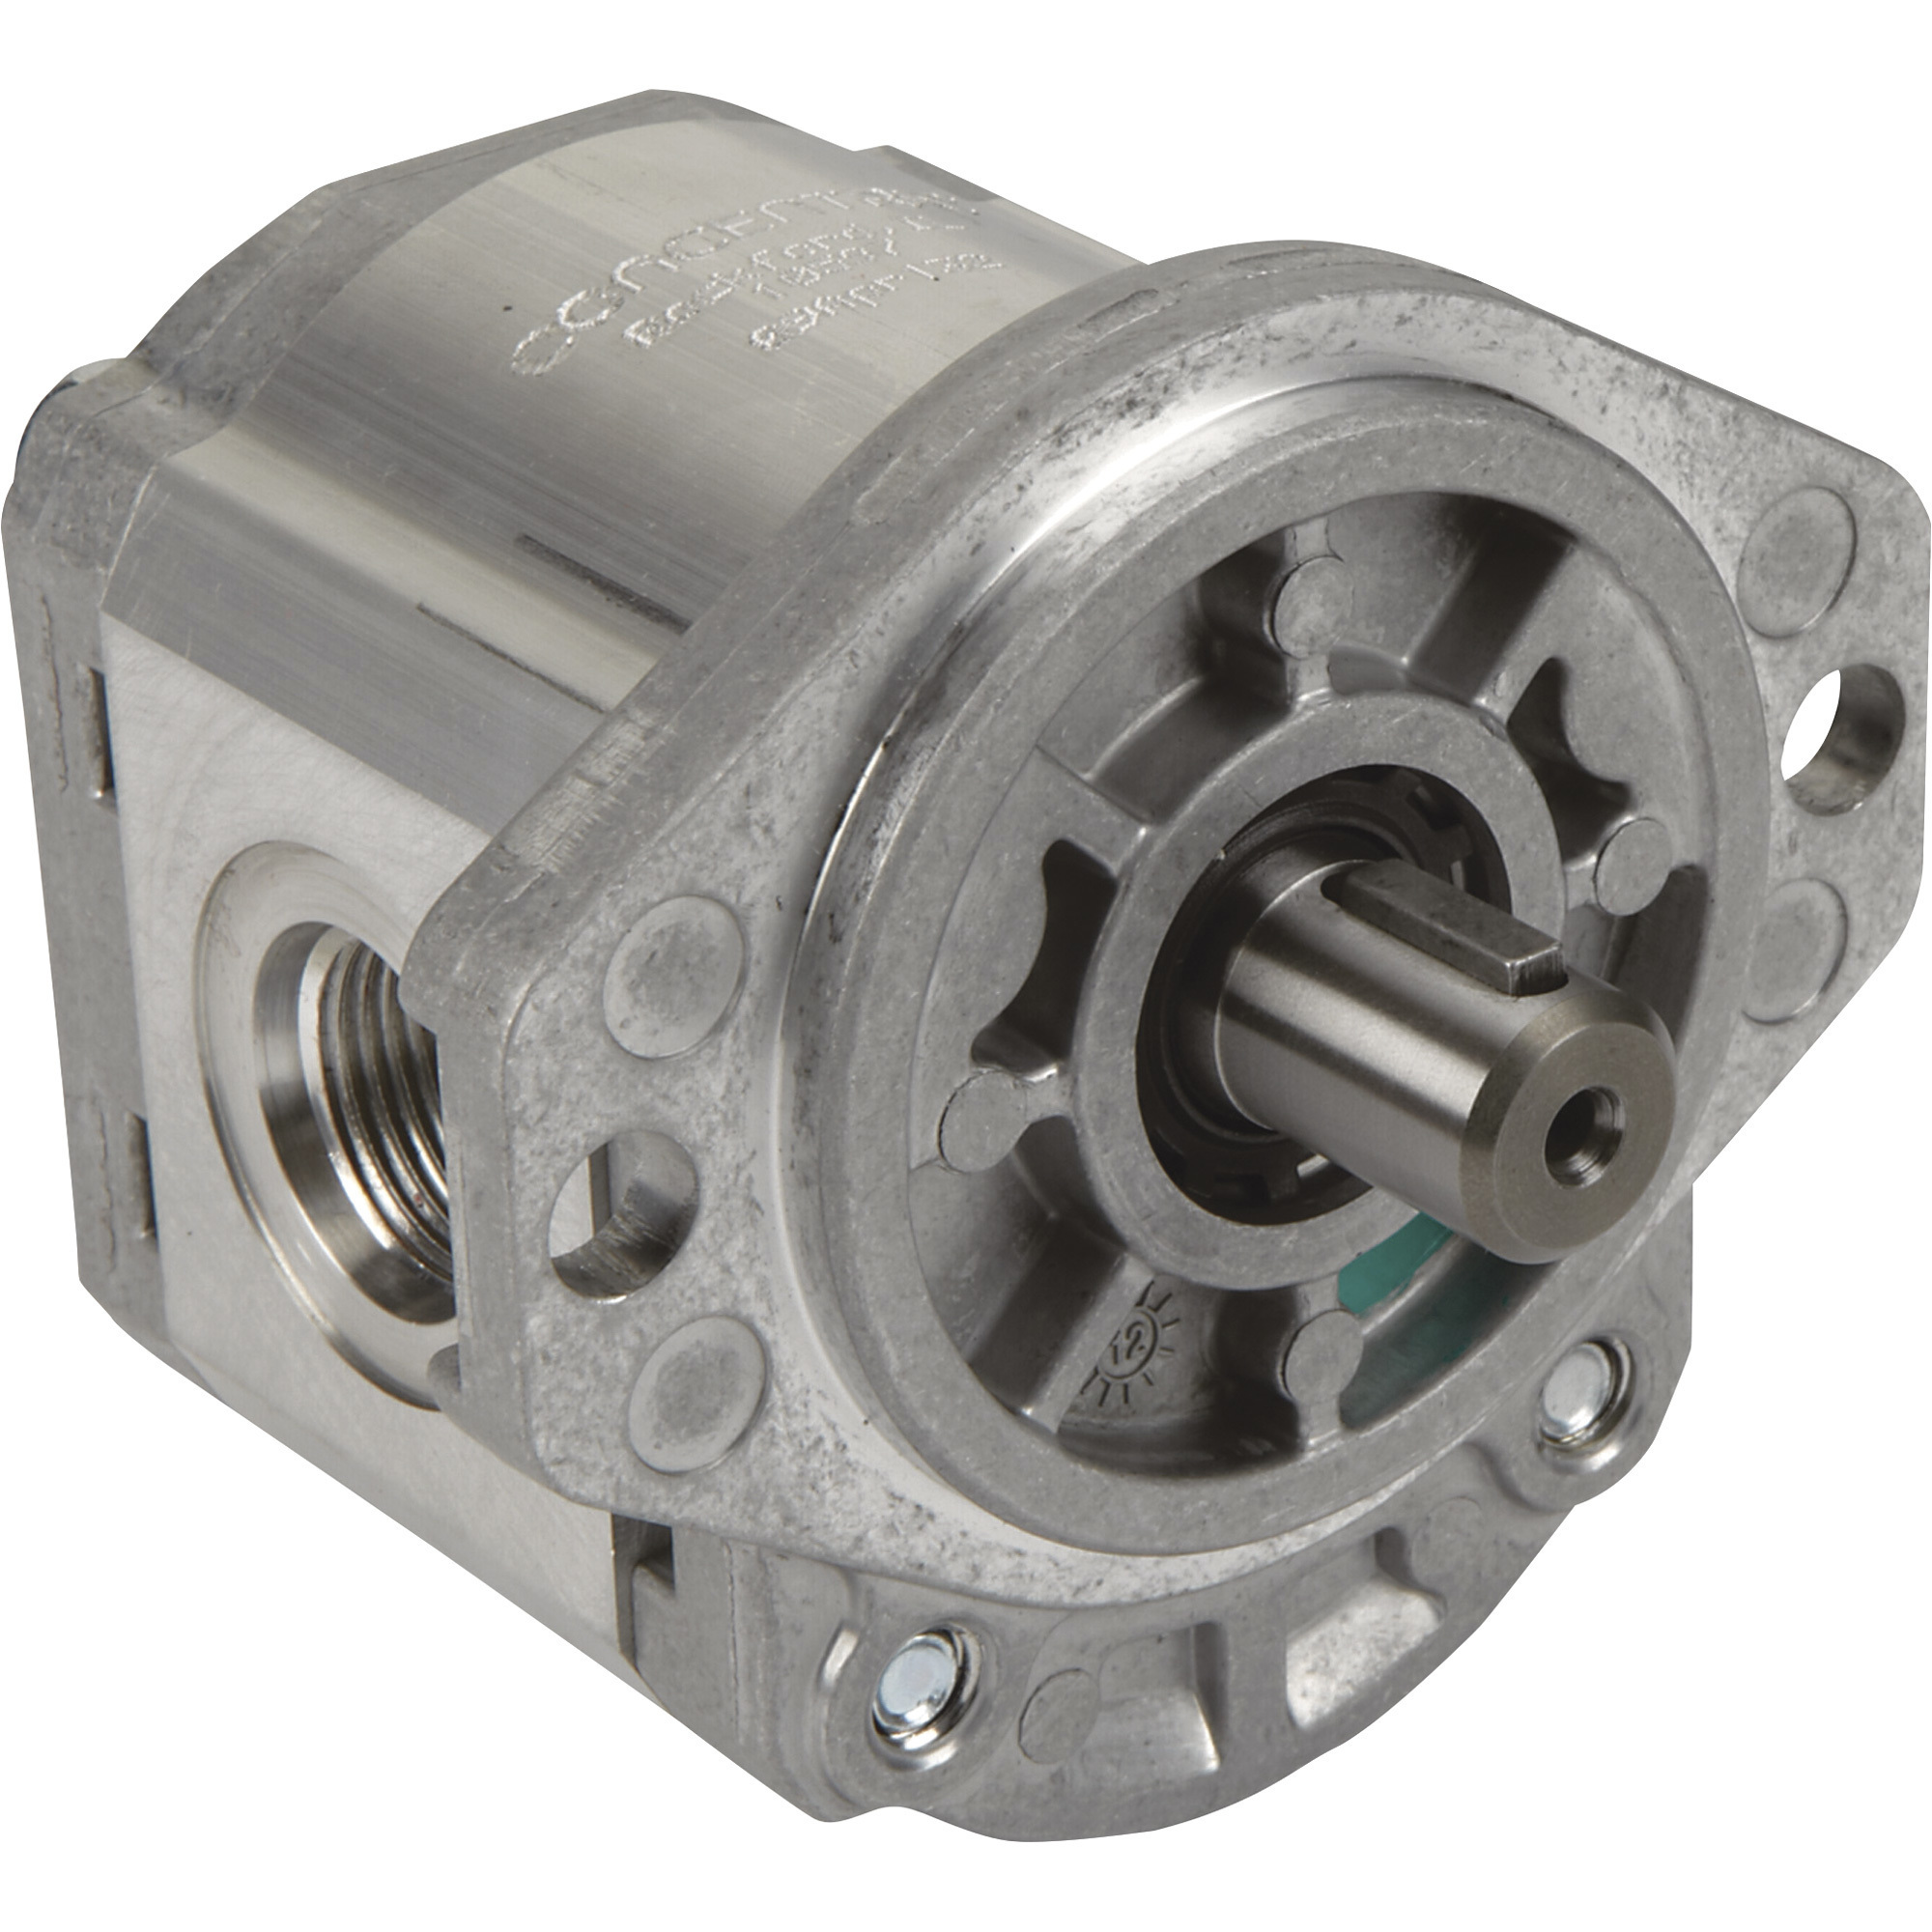 Concentric Hydraulic Birotational Gear Motor, 4,000 PSI, 3,000 Max. RPMs, Model WM09A1C160B-03BA108N